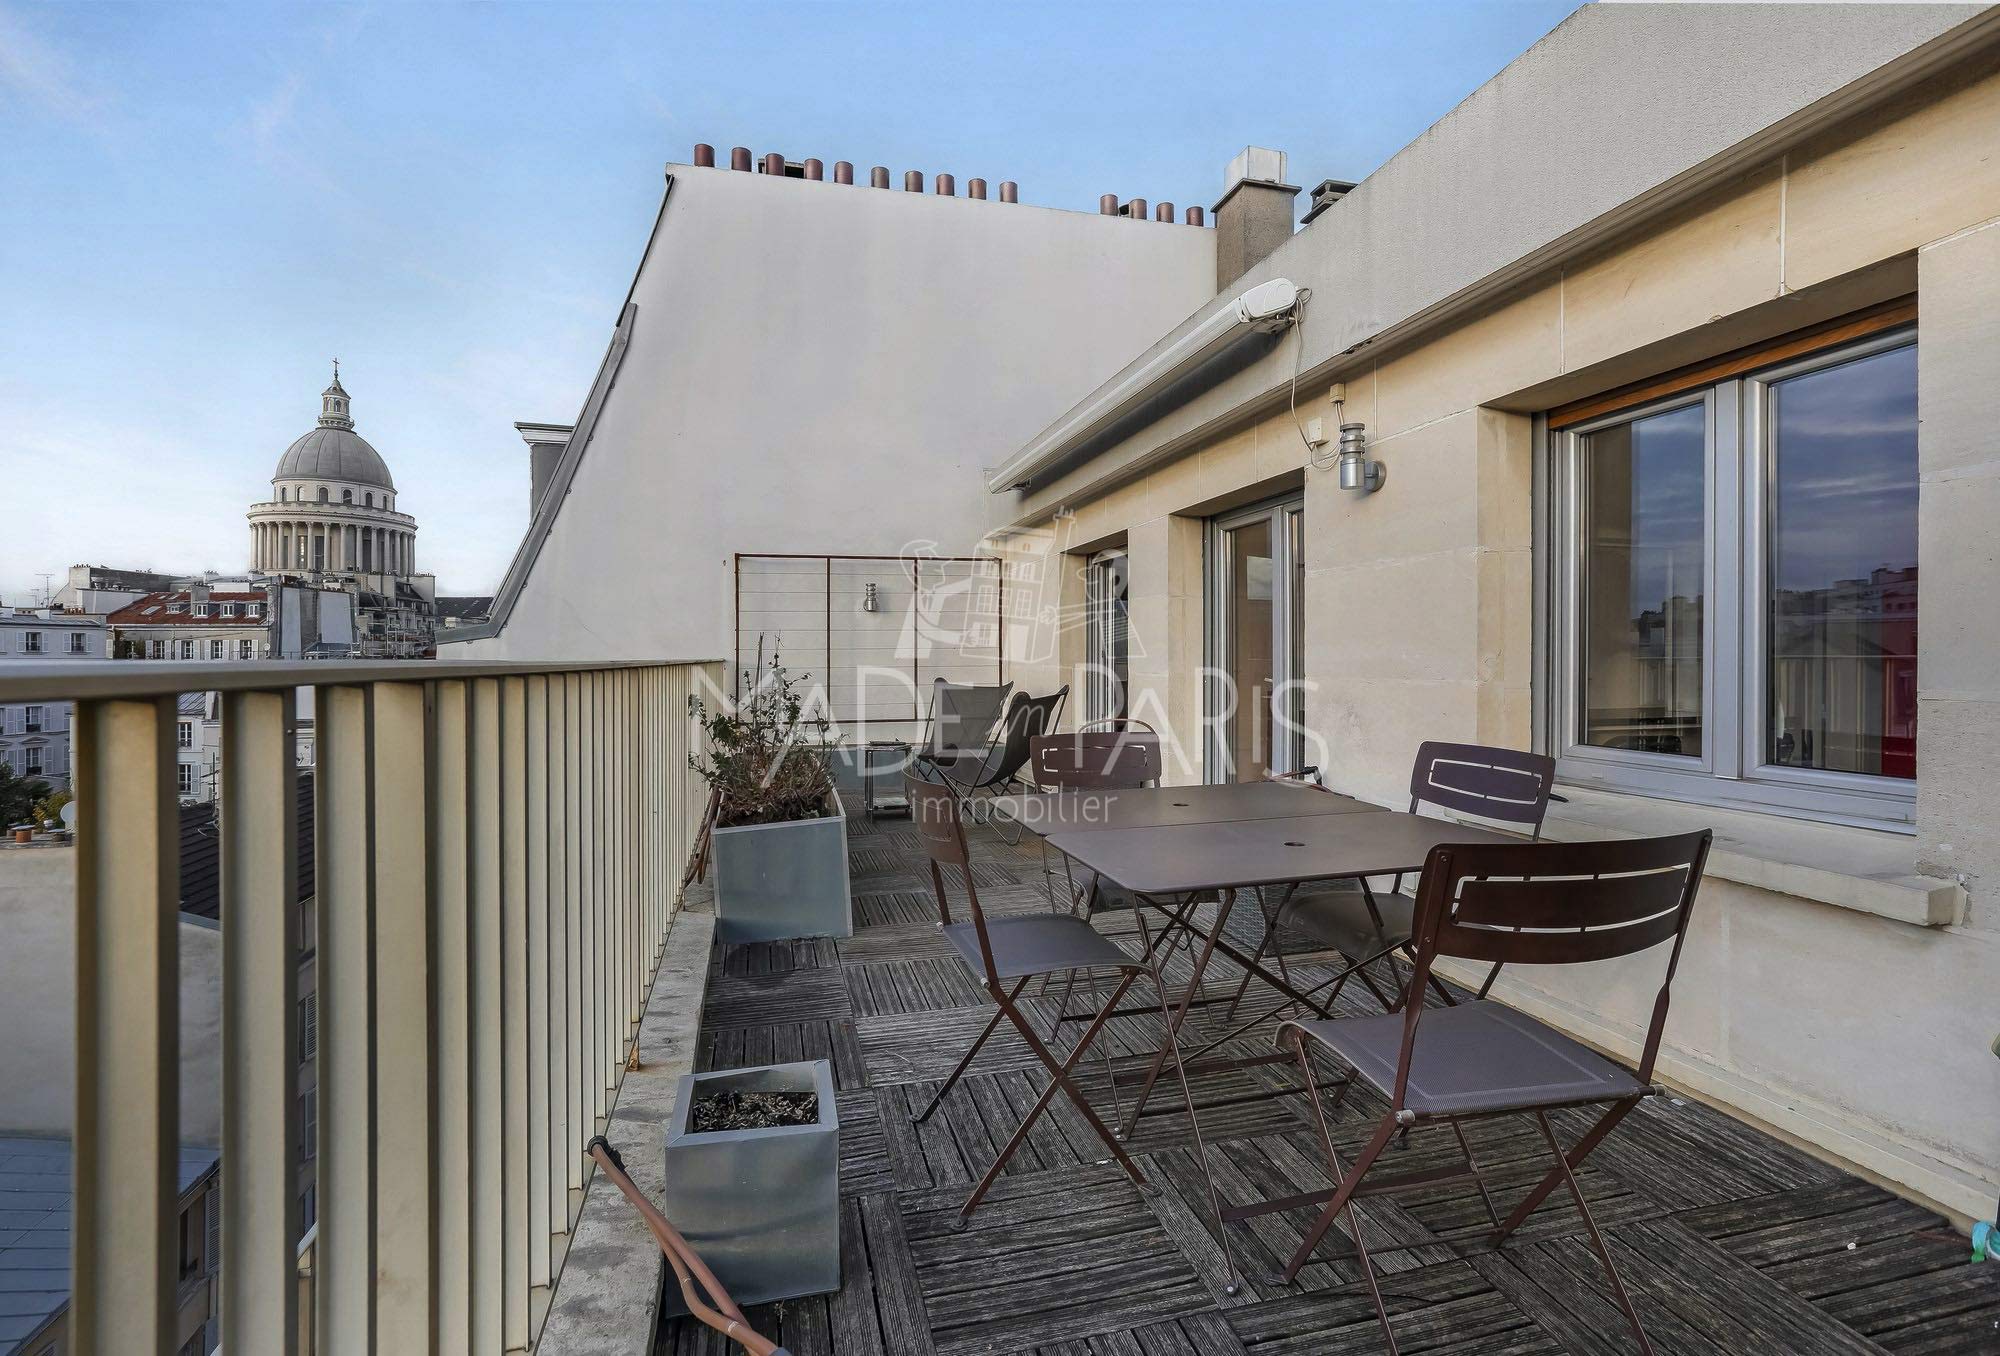 1-Made-in-paris-immobilier-vendre-acheter-appartement-paris-5-laromiguiere-terrasse-vue